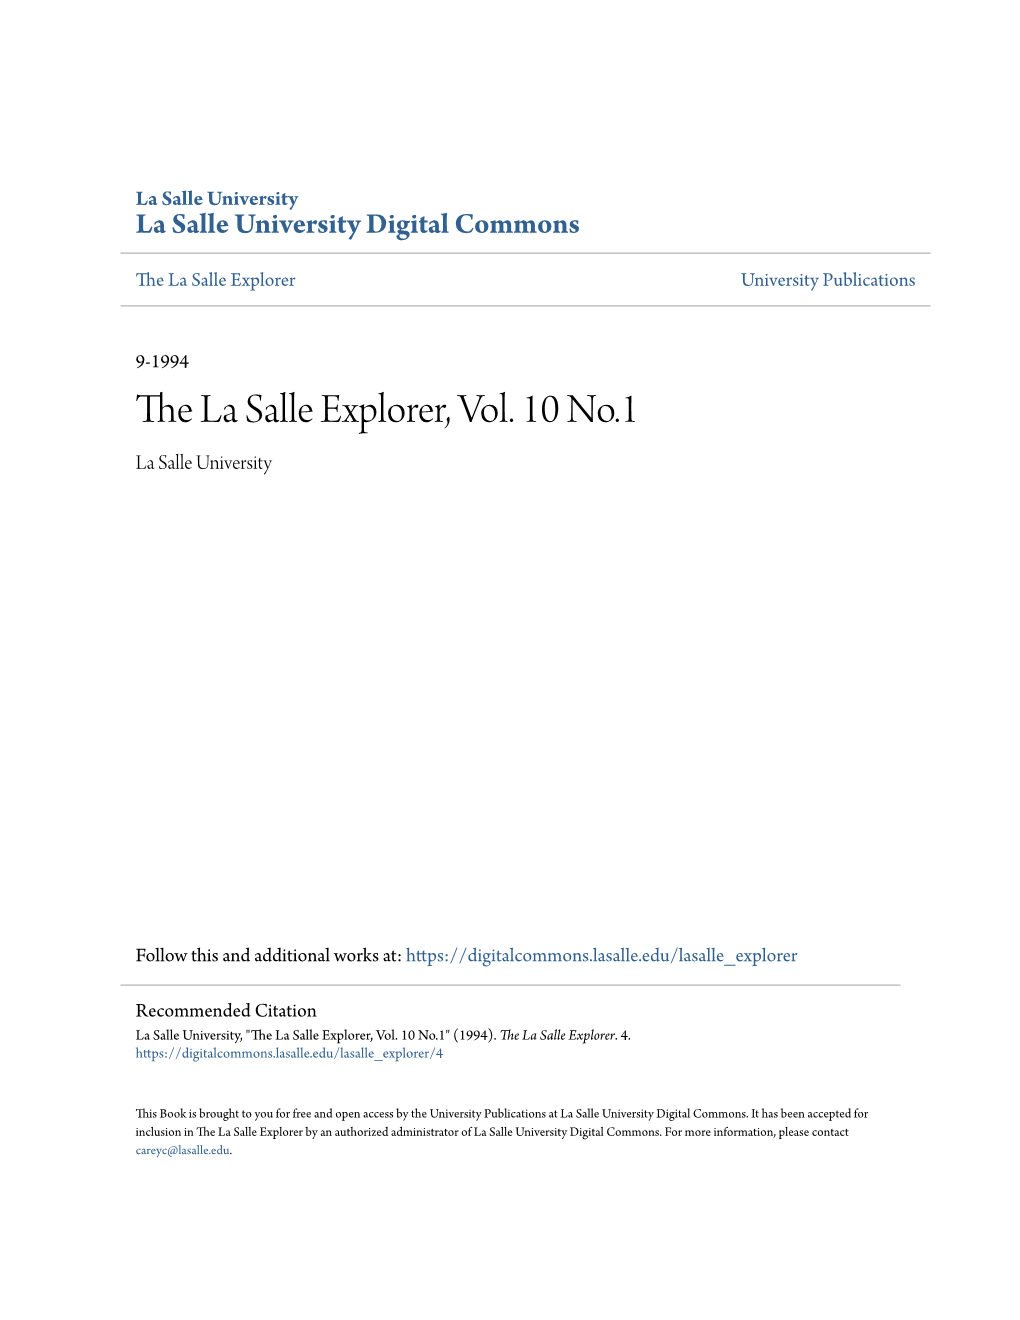 The La Salle Explorer, Vol. 10 No.1 La Salle University